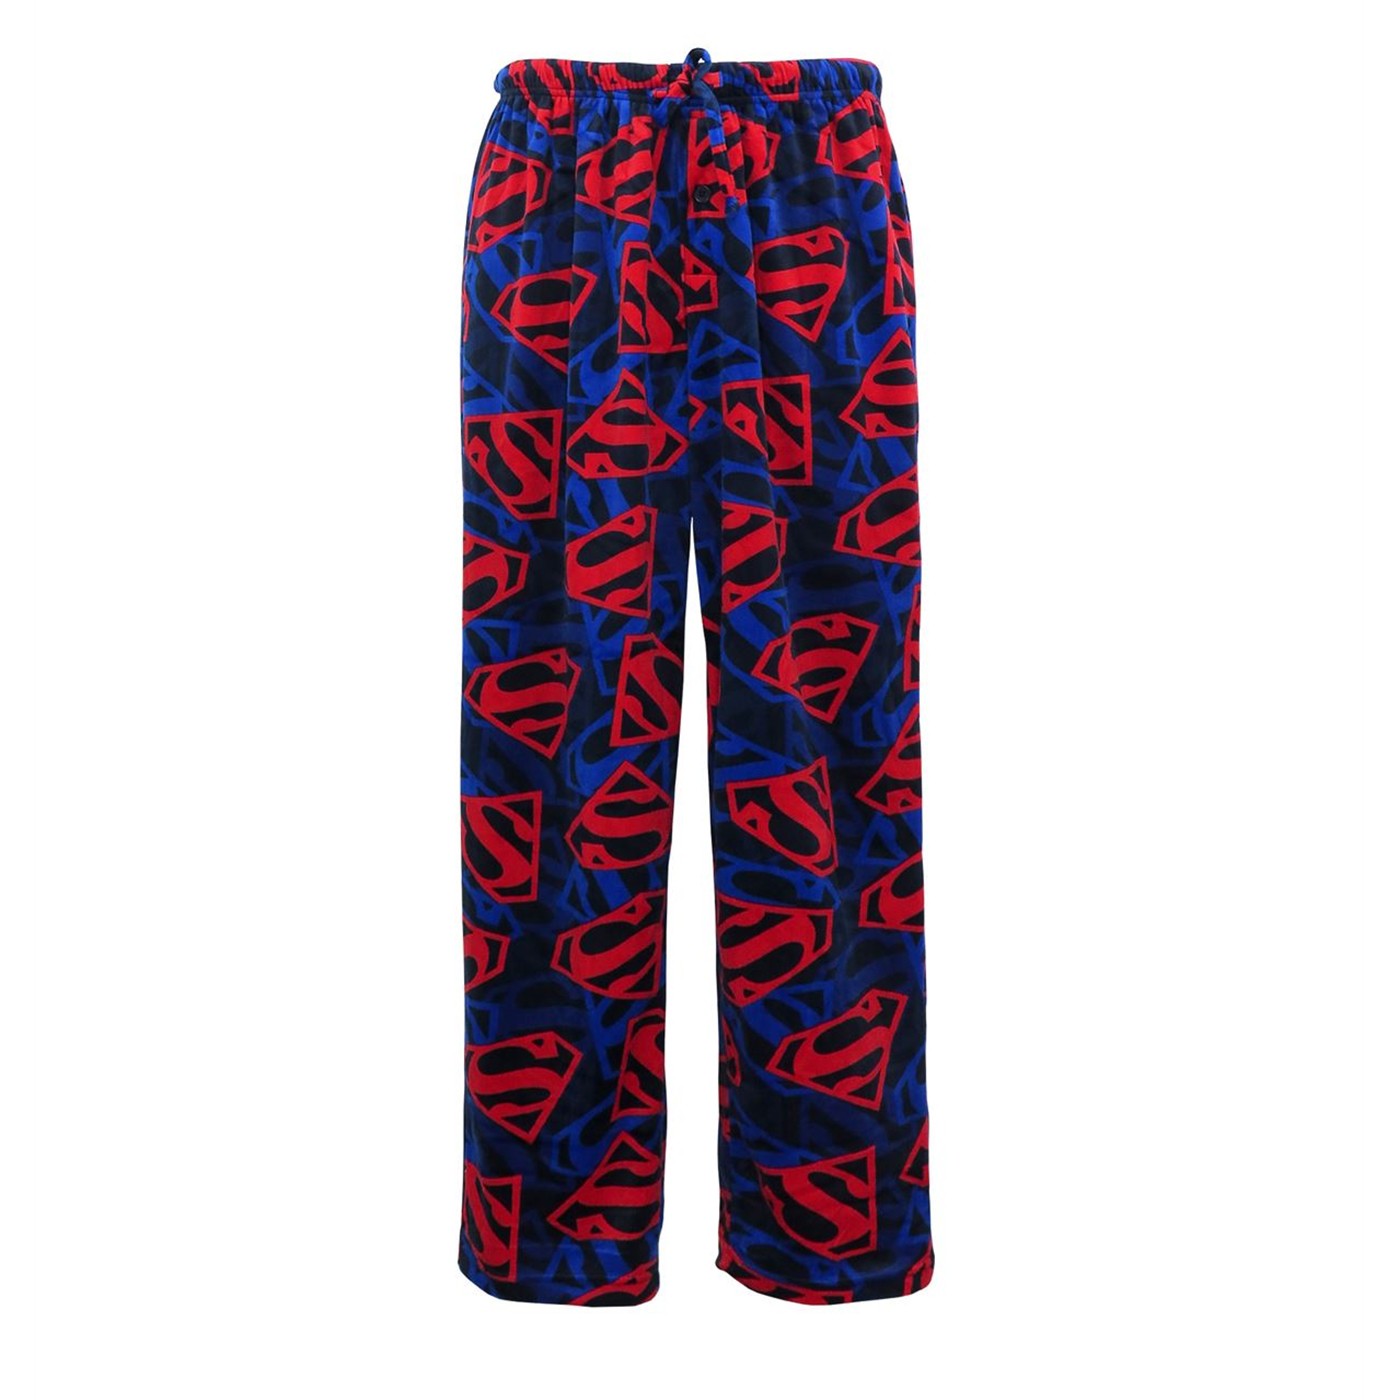 Superman Symbols All-Over Print Pajama Pants